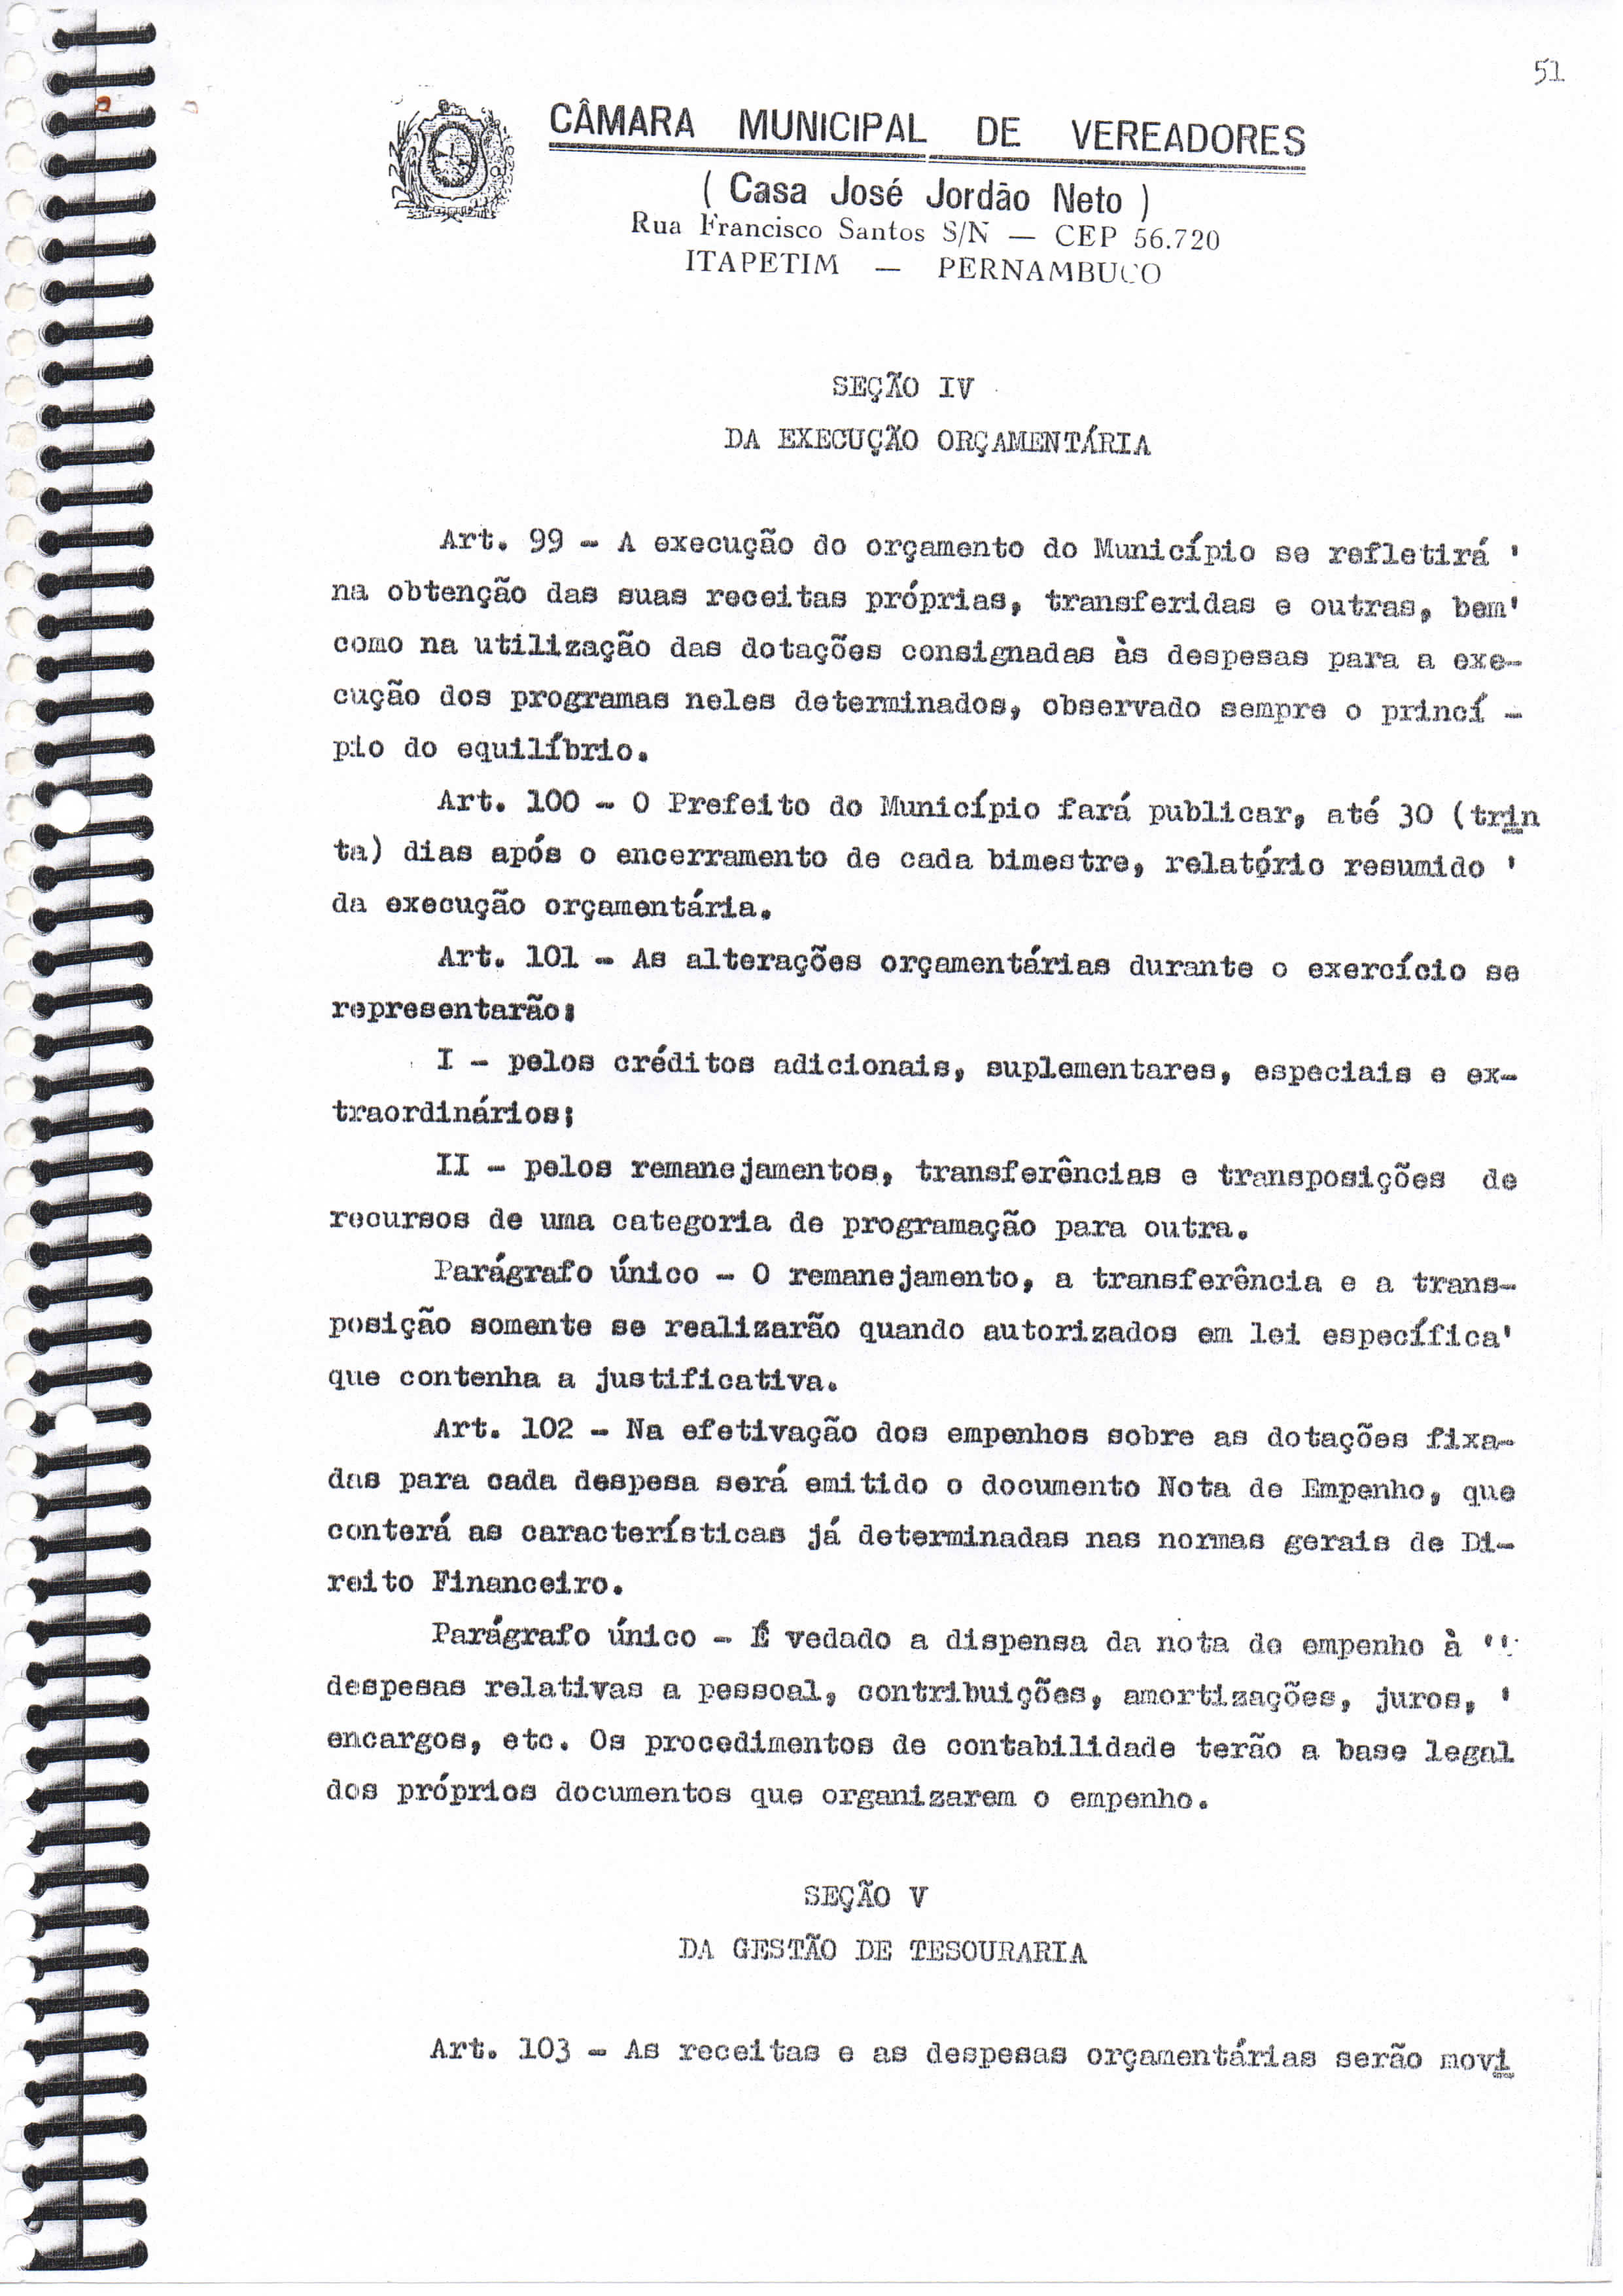 Lei Organica do Municipio_Página_59.jpg